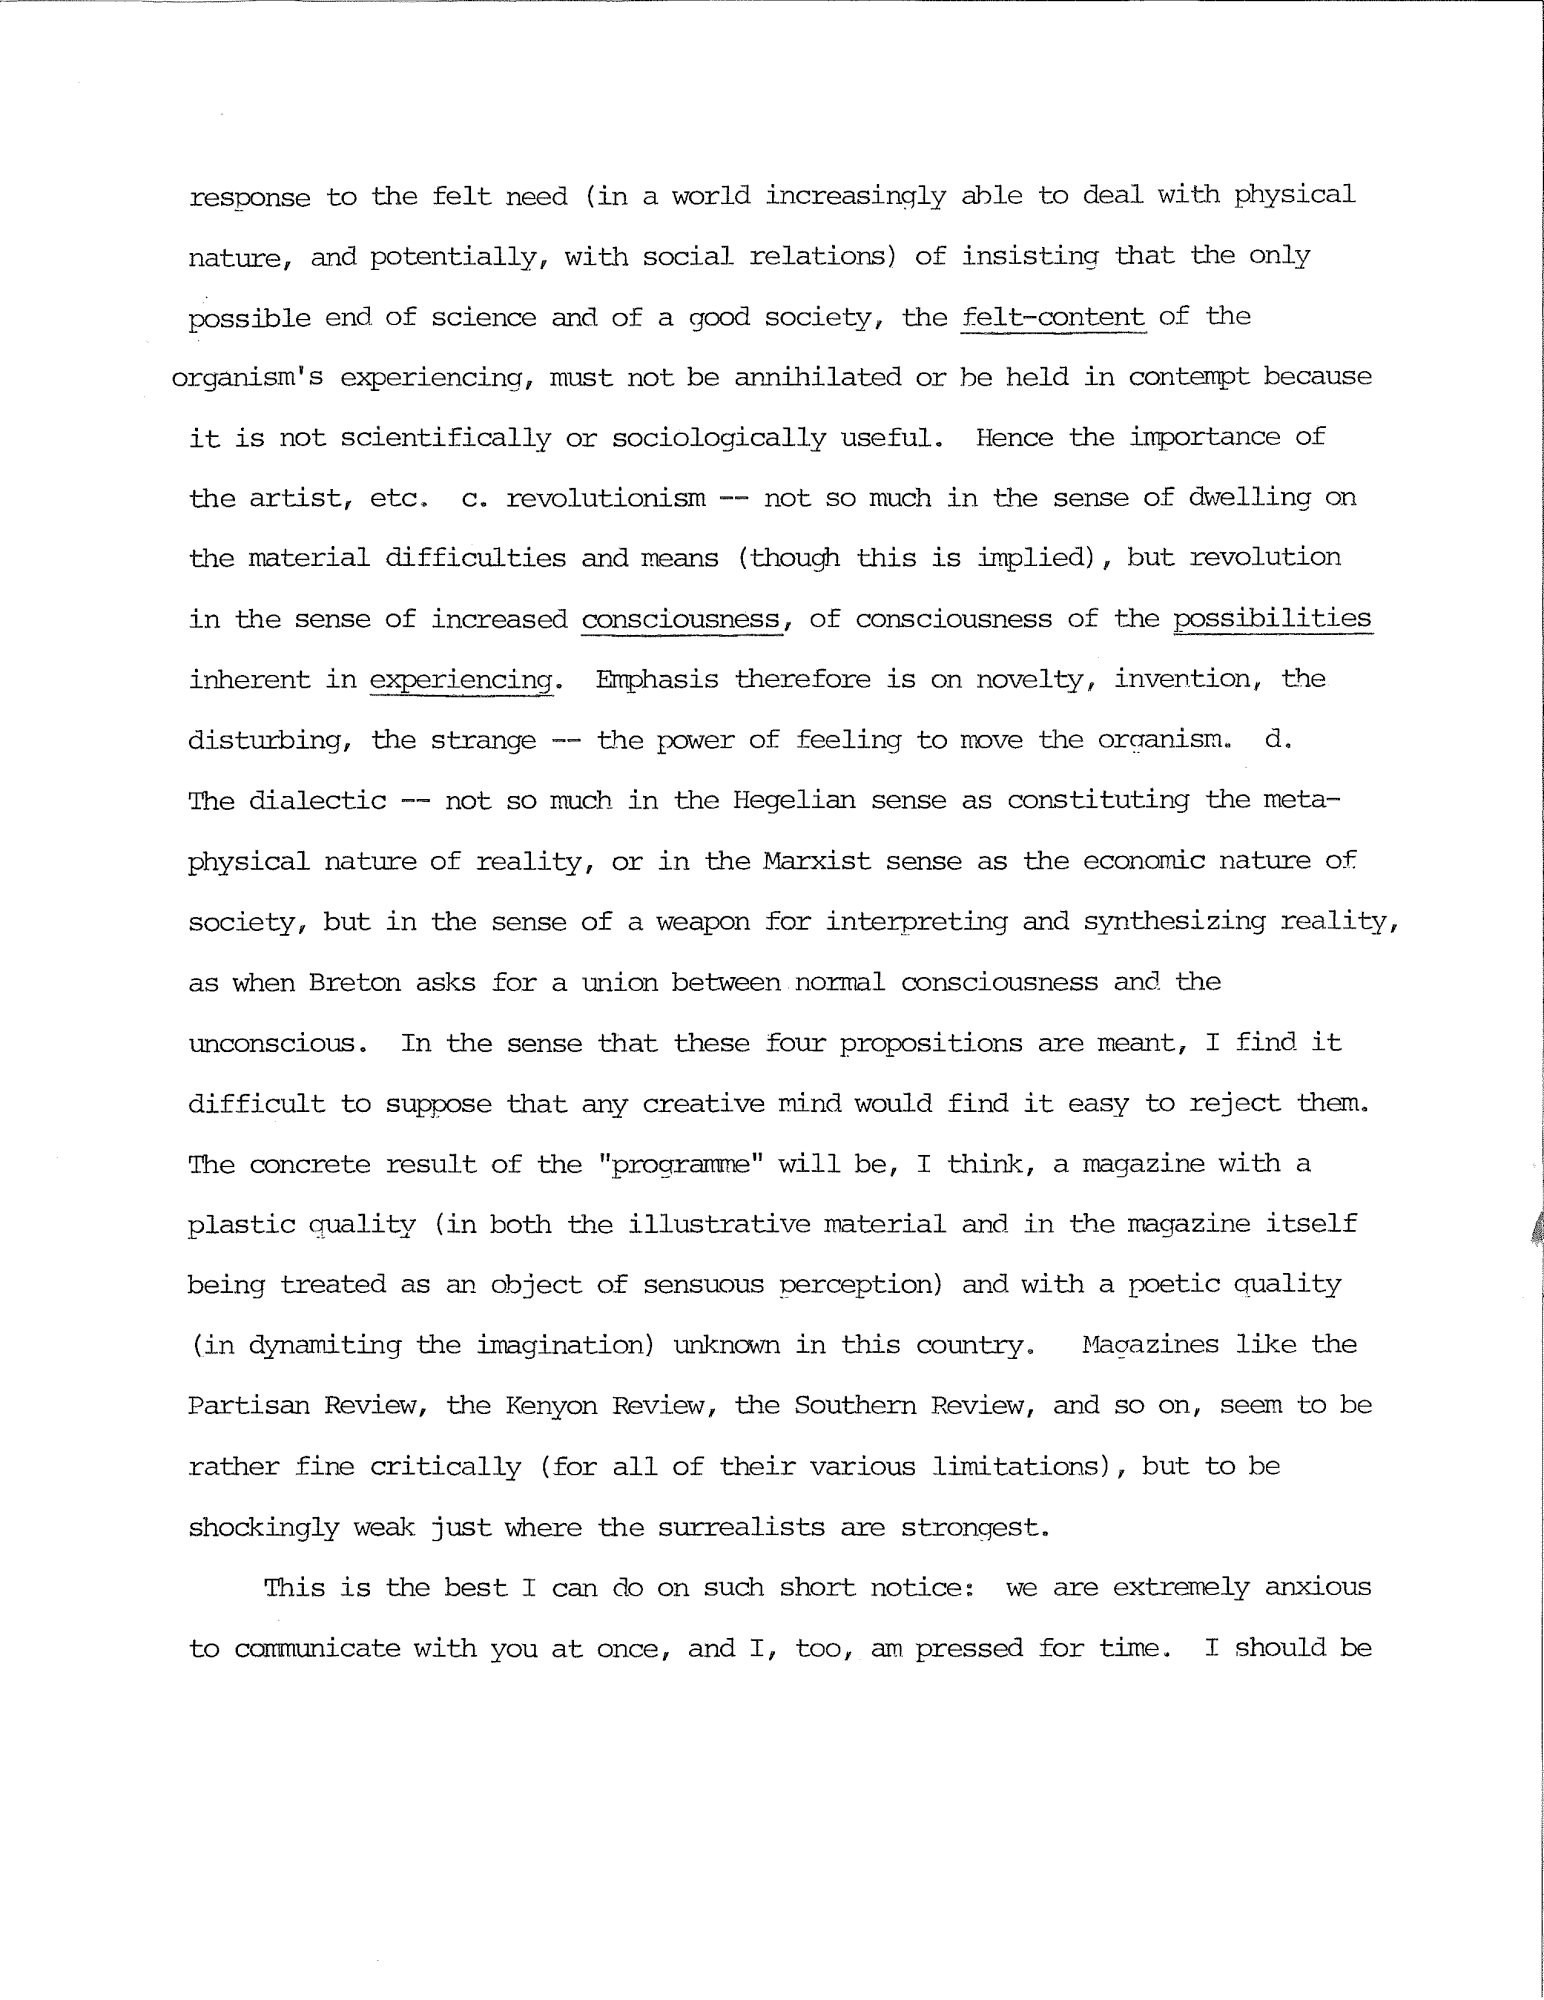 Letter to William Carlos Williams, 1941